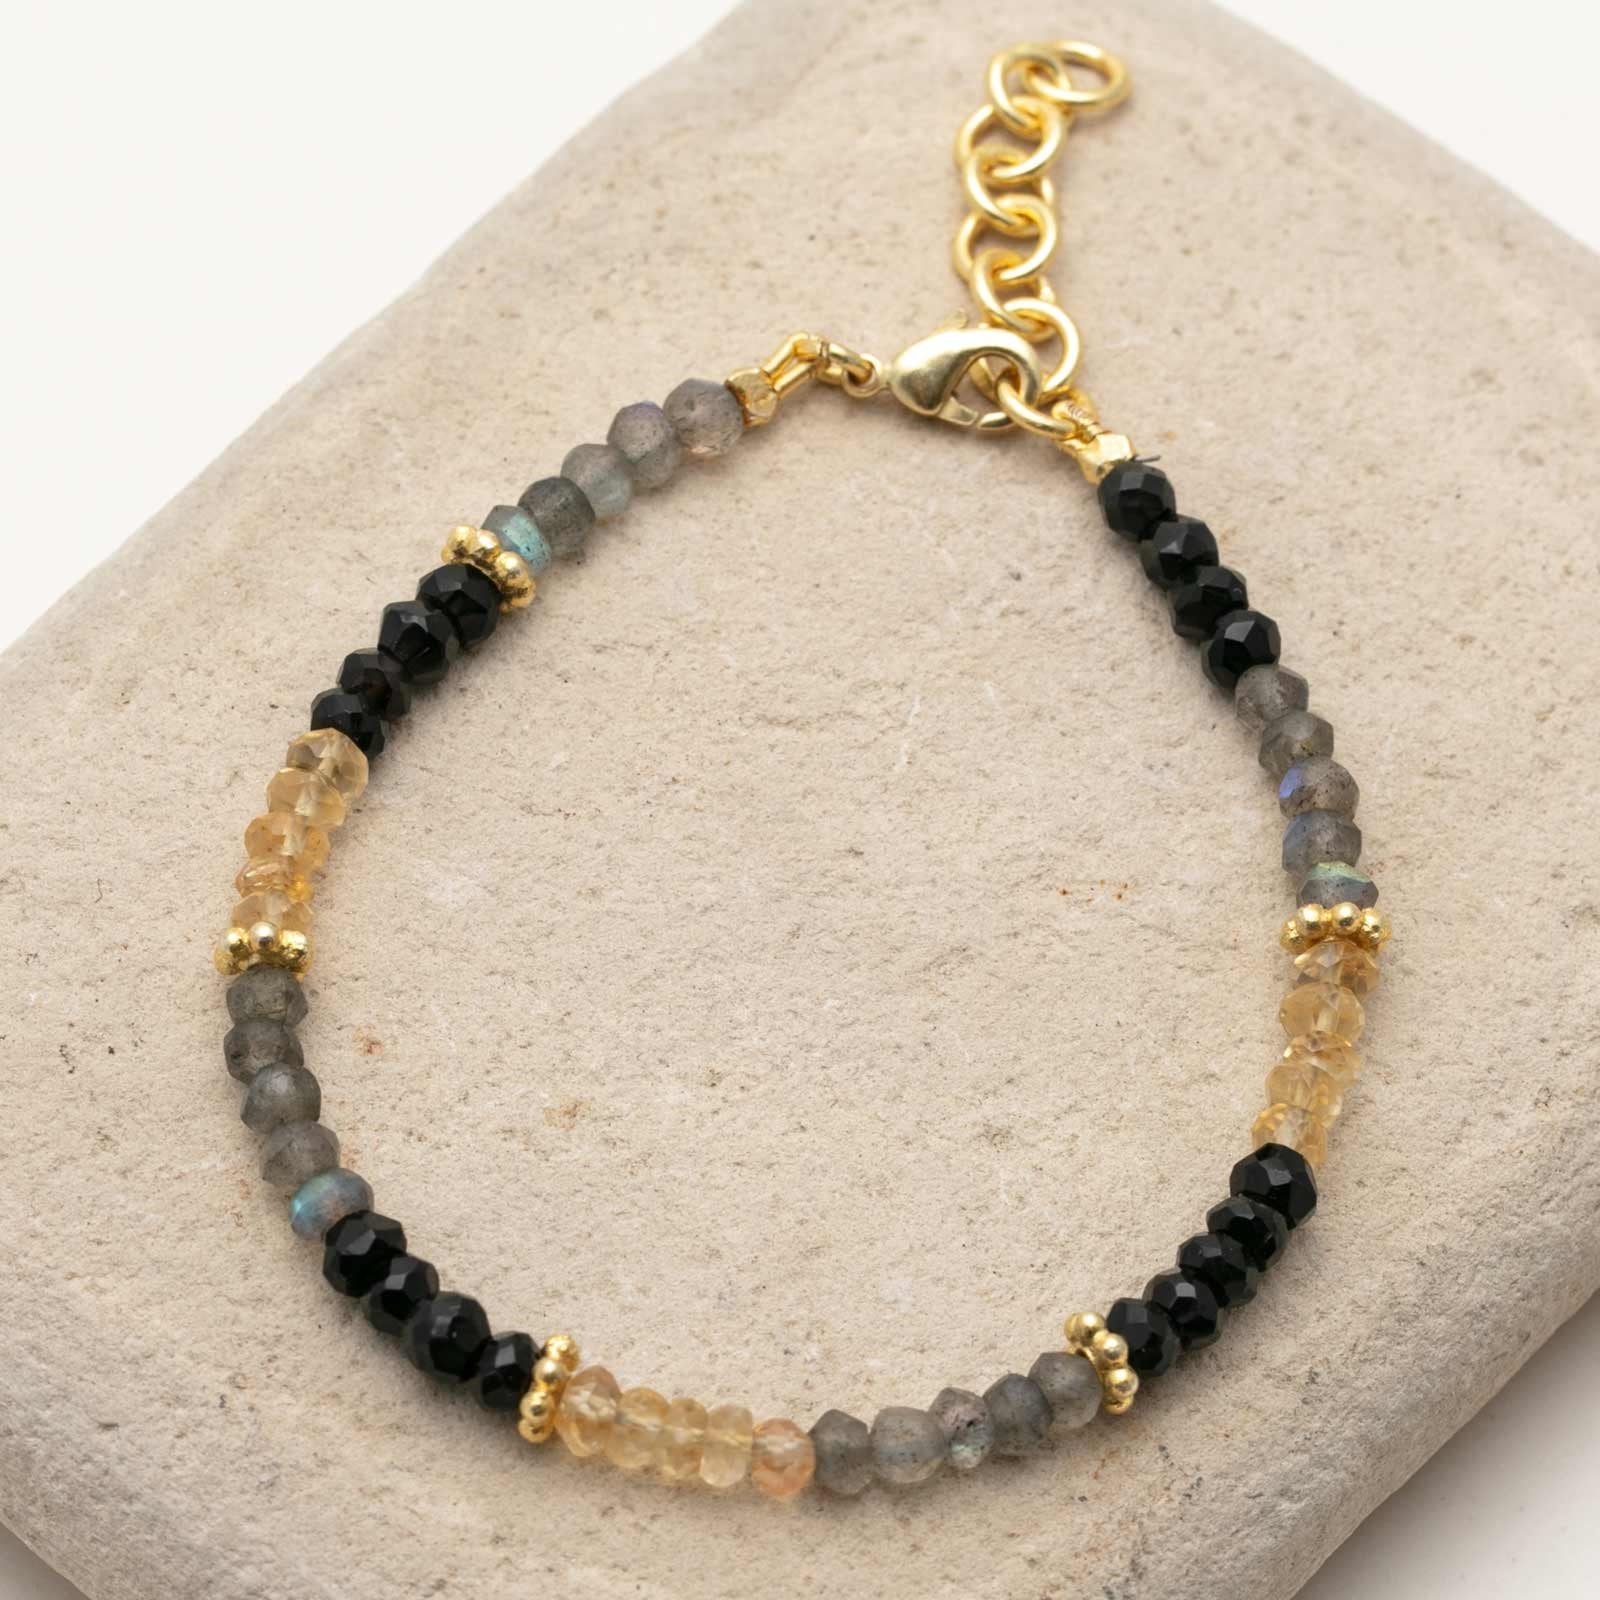 Beaded bracelet handmade with 18k gold plated and crescent moon charm -  Heart Mala Yoga Jewellery